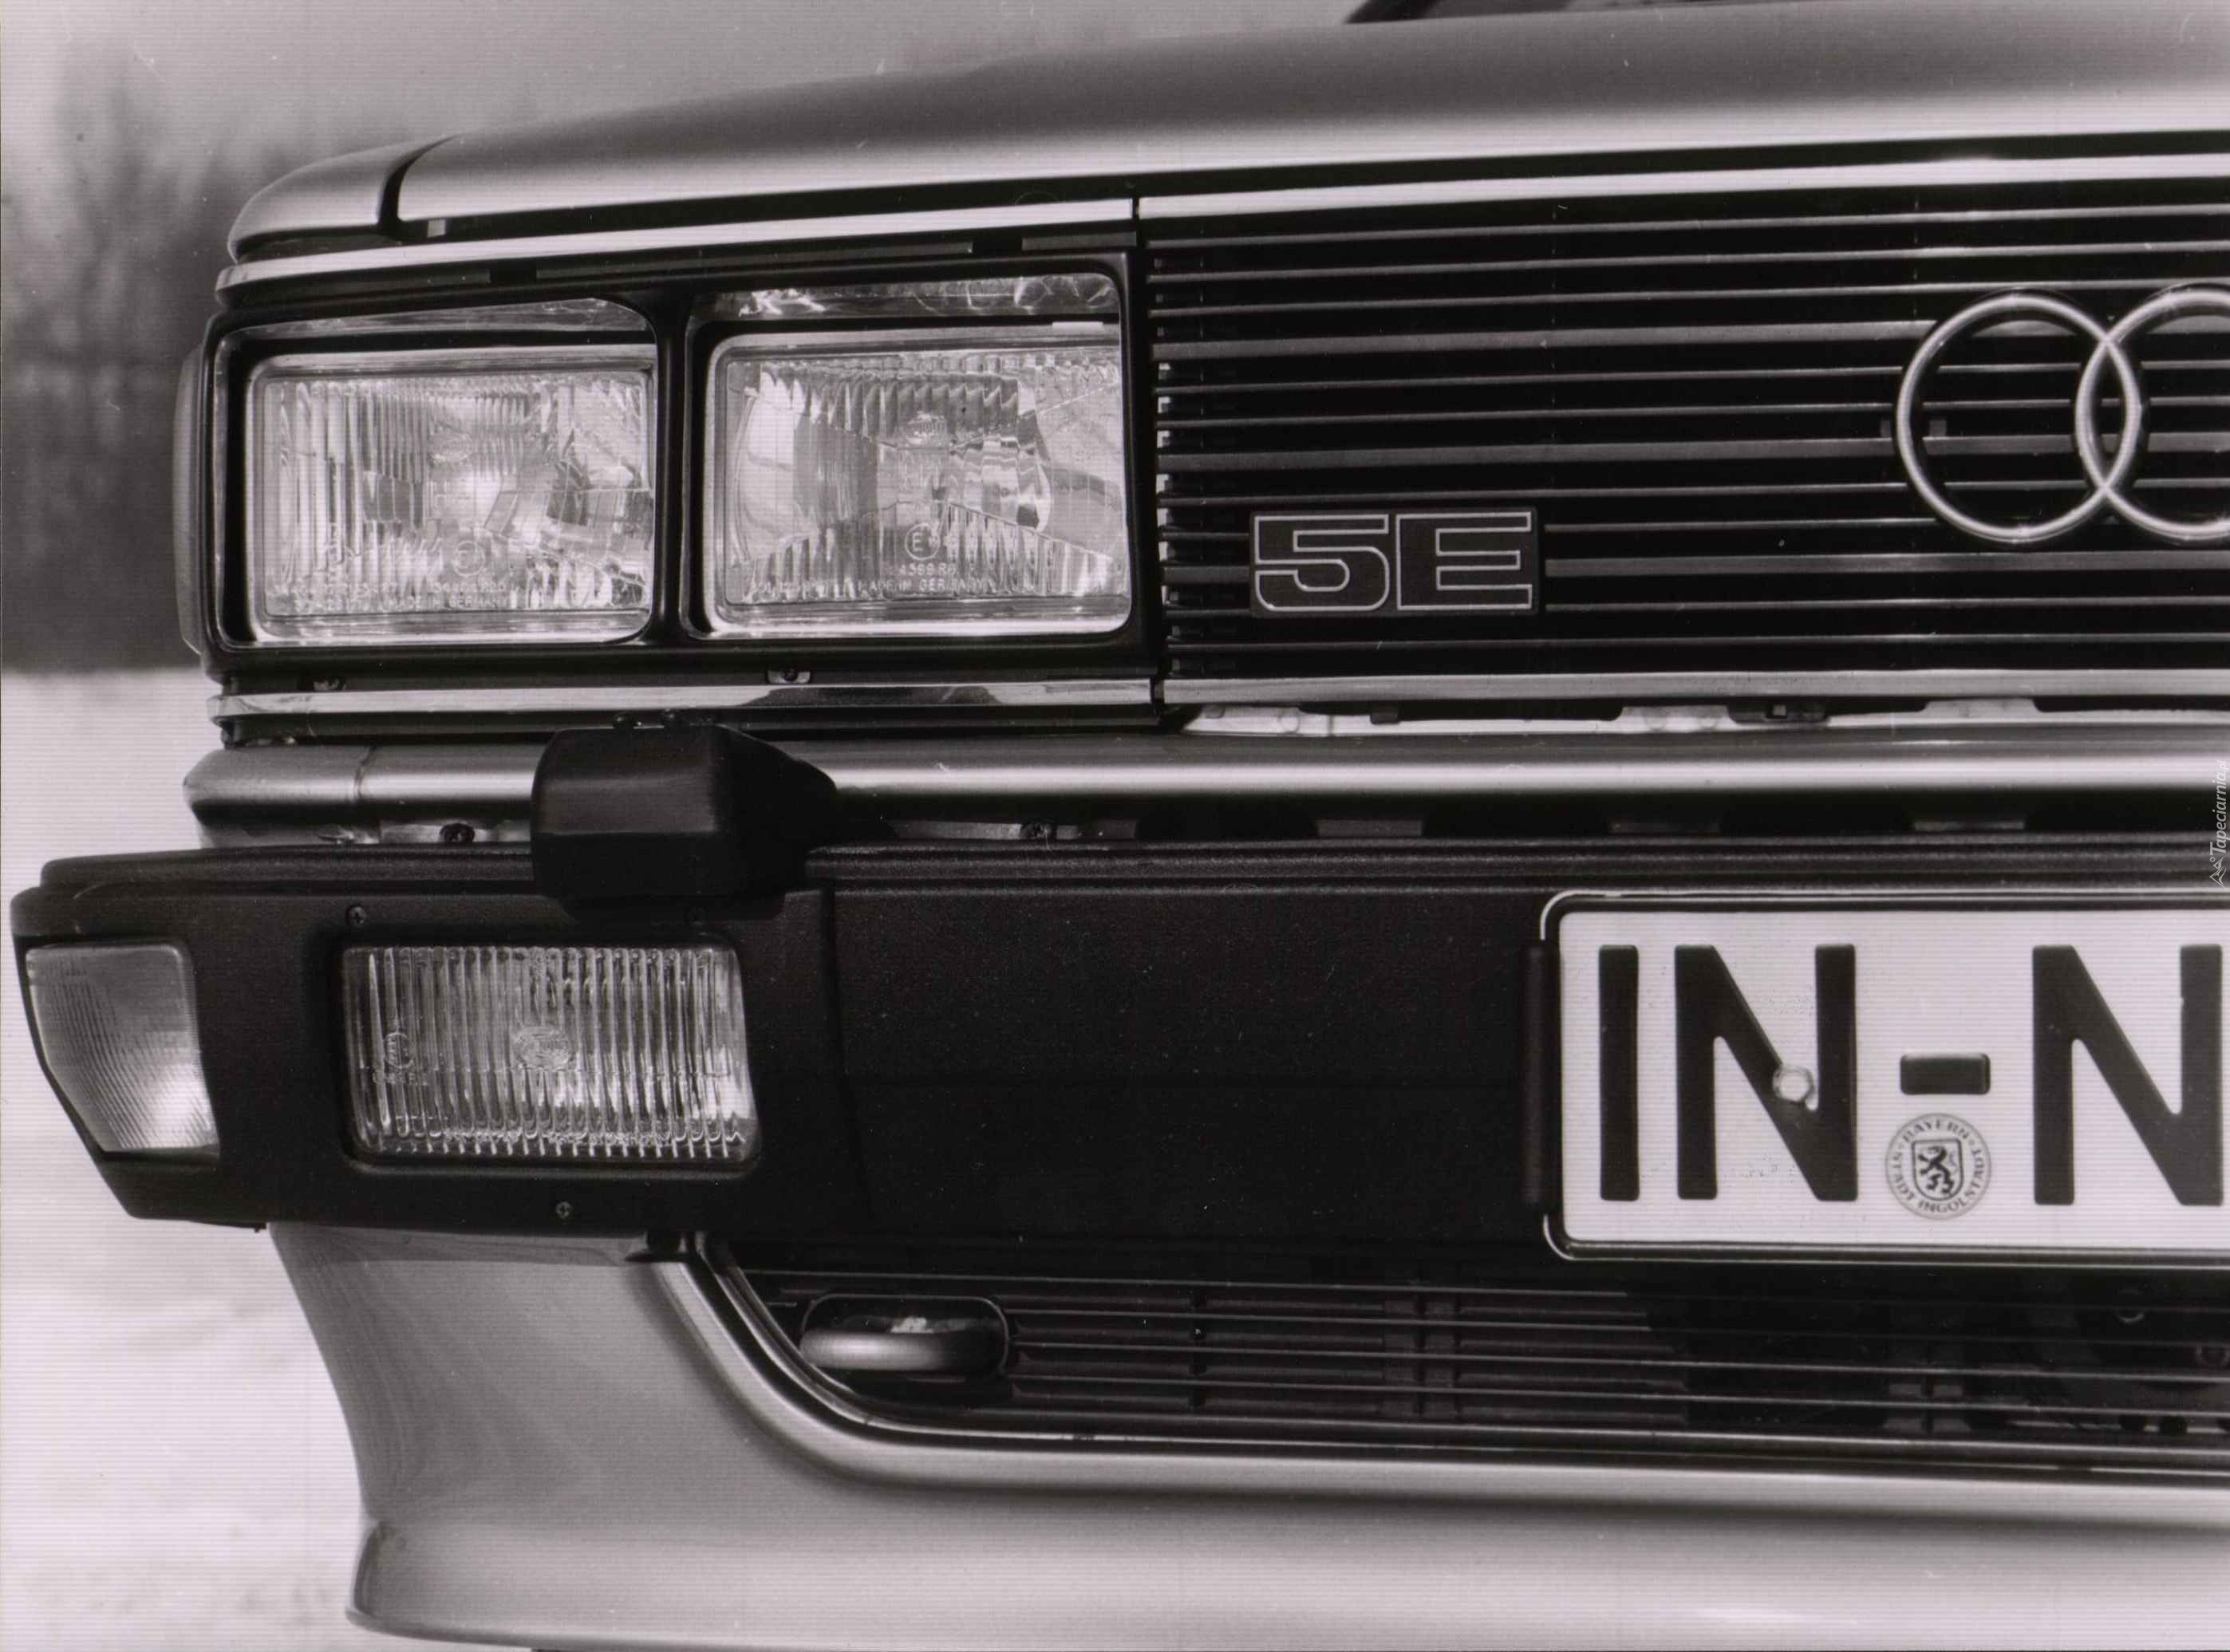 Audi GT, 5E, Halogen